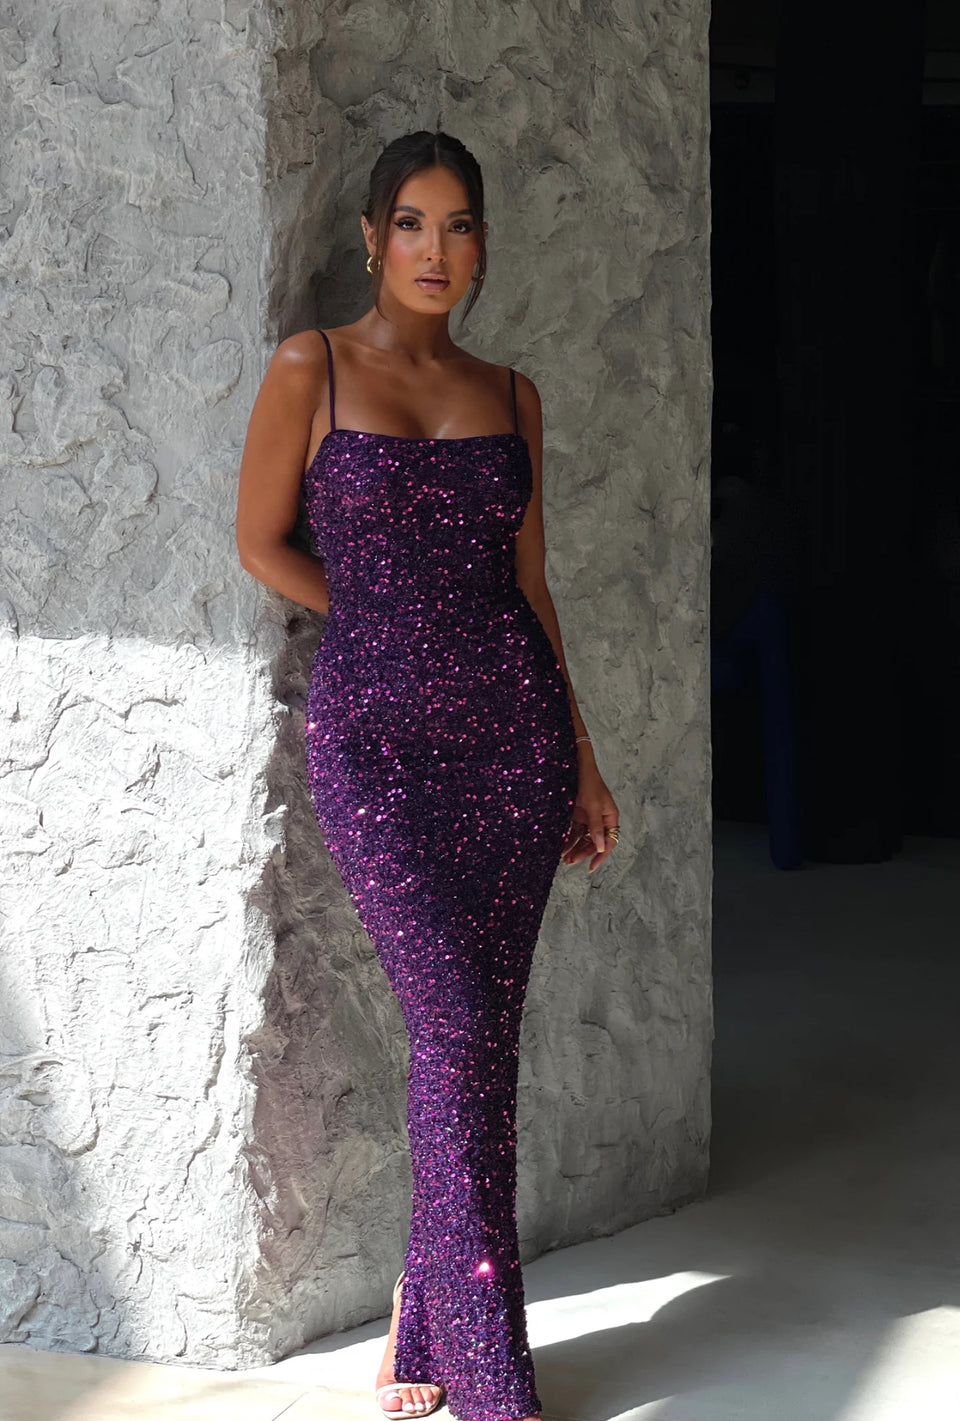 “Oprah” sequin dress